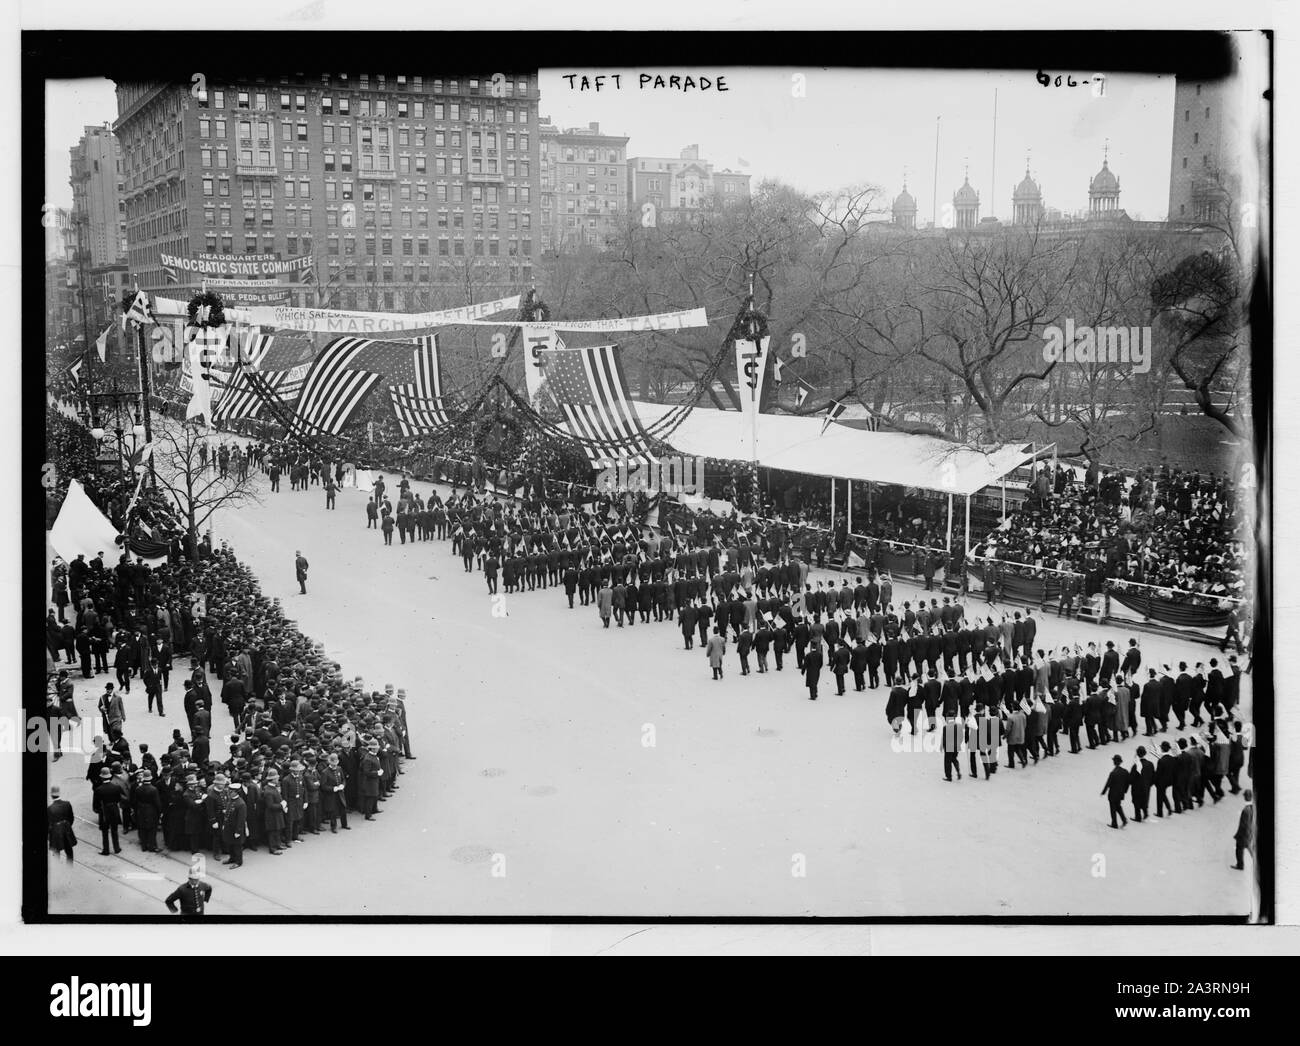 Taft Parade [New York] Stock Photo